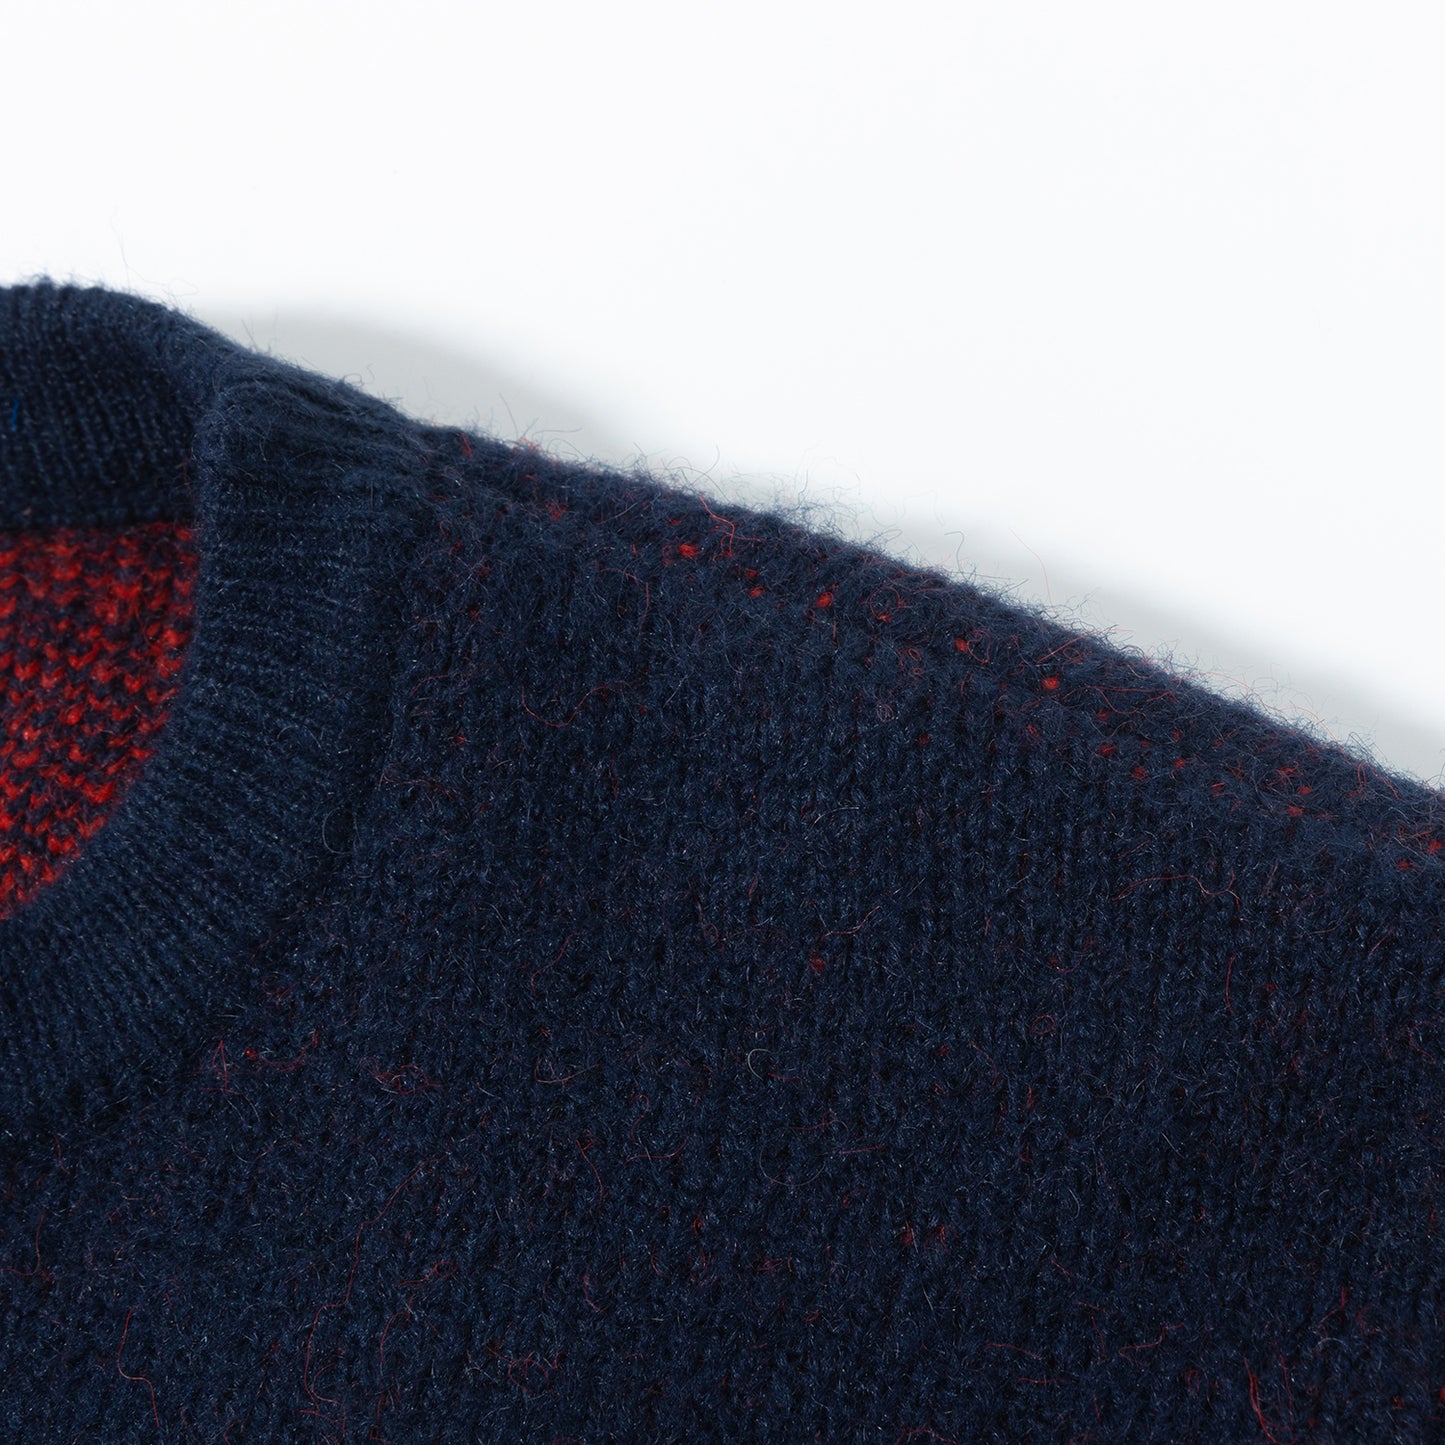 Sweater Kelp, Navy-Red